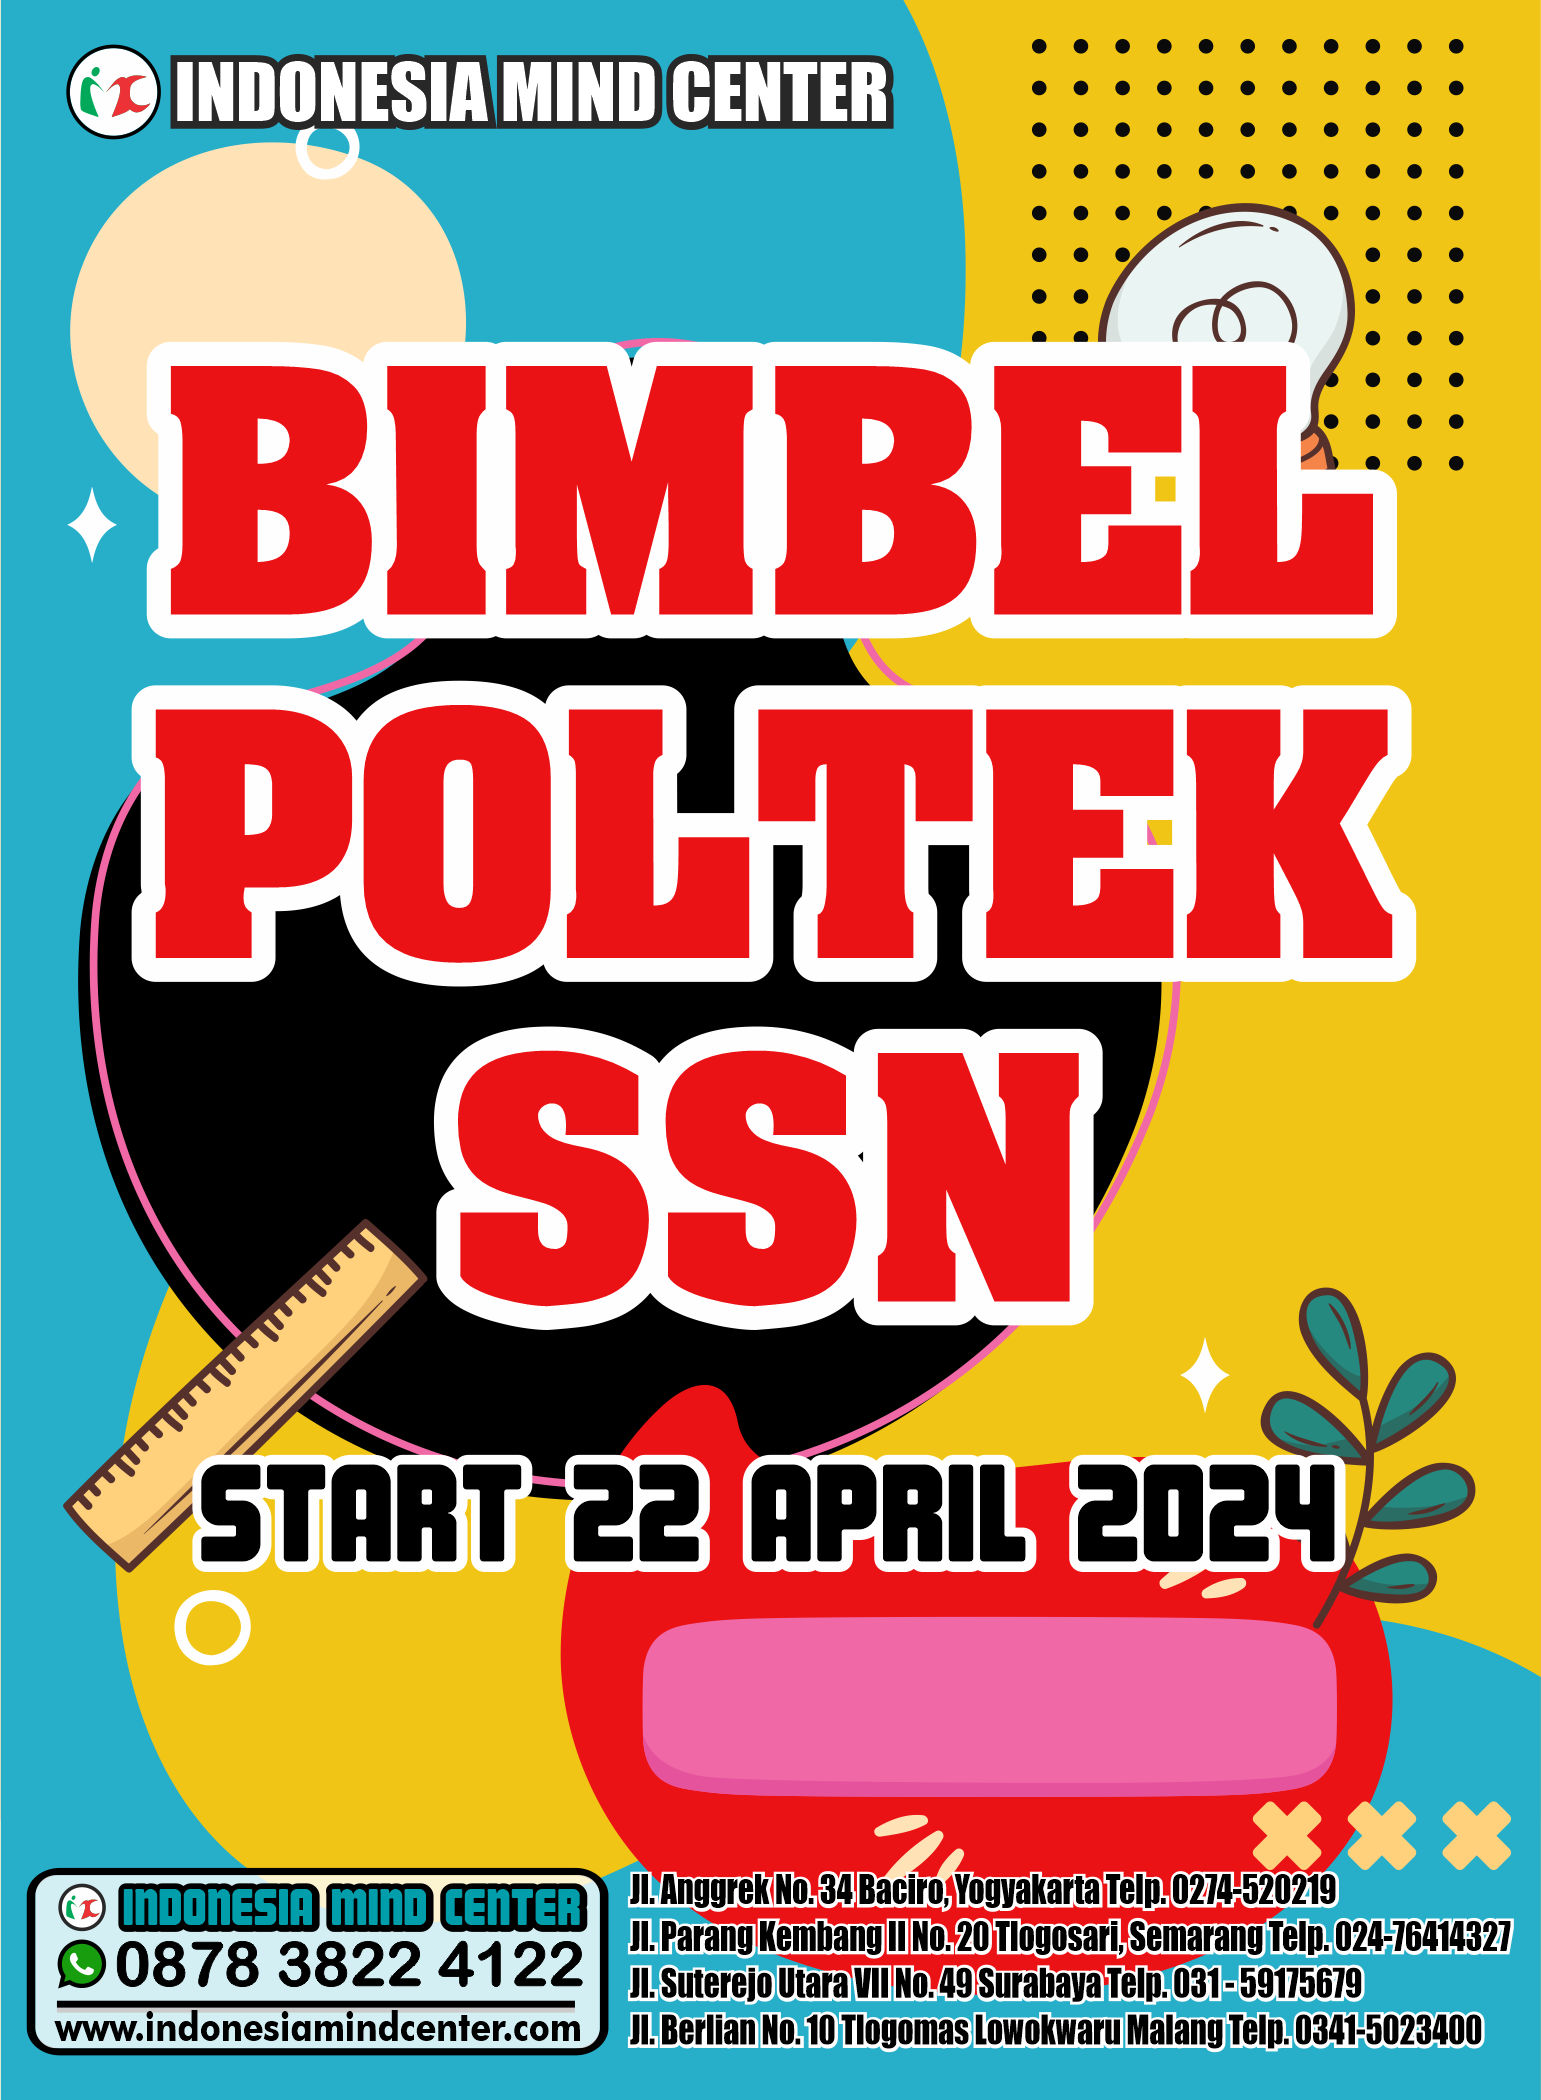 BIMBEL POLTEK SSN START 22 APRIL 2024